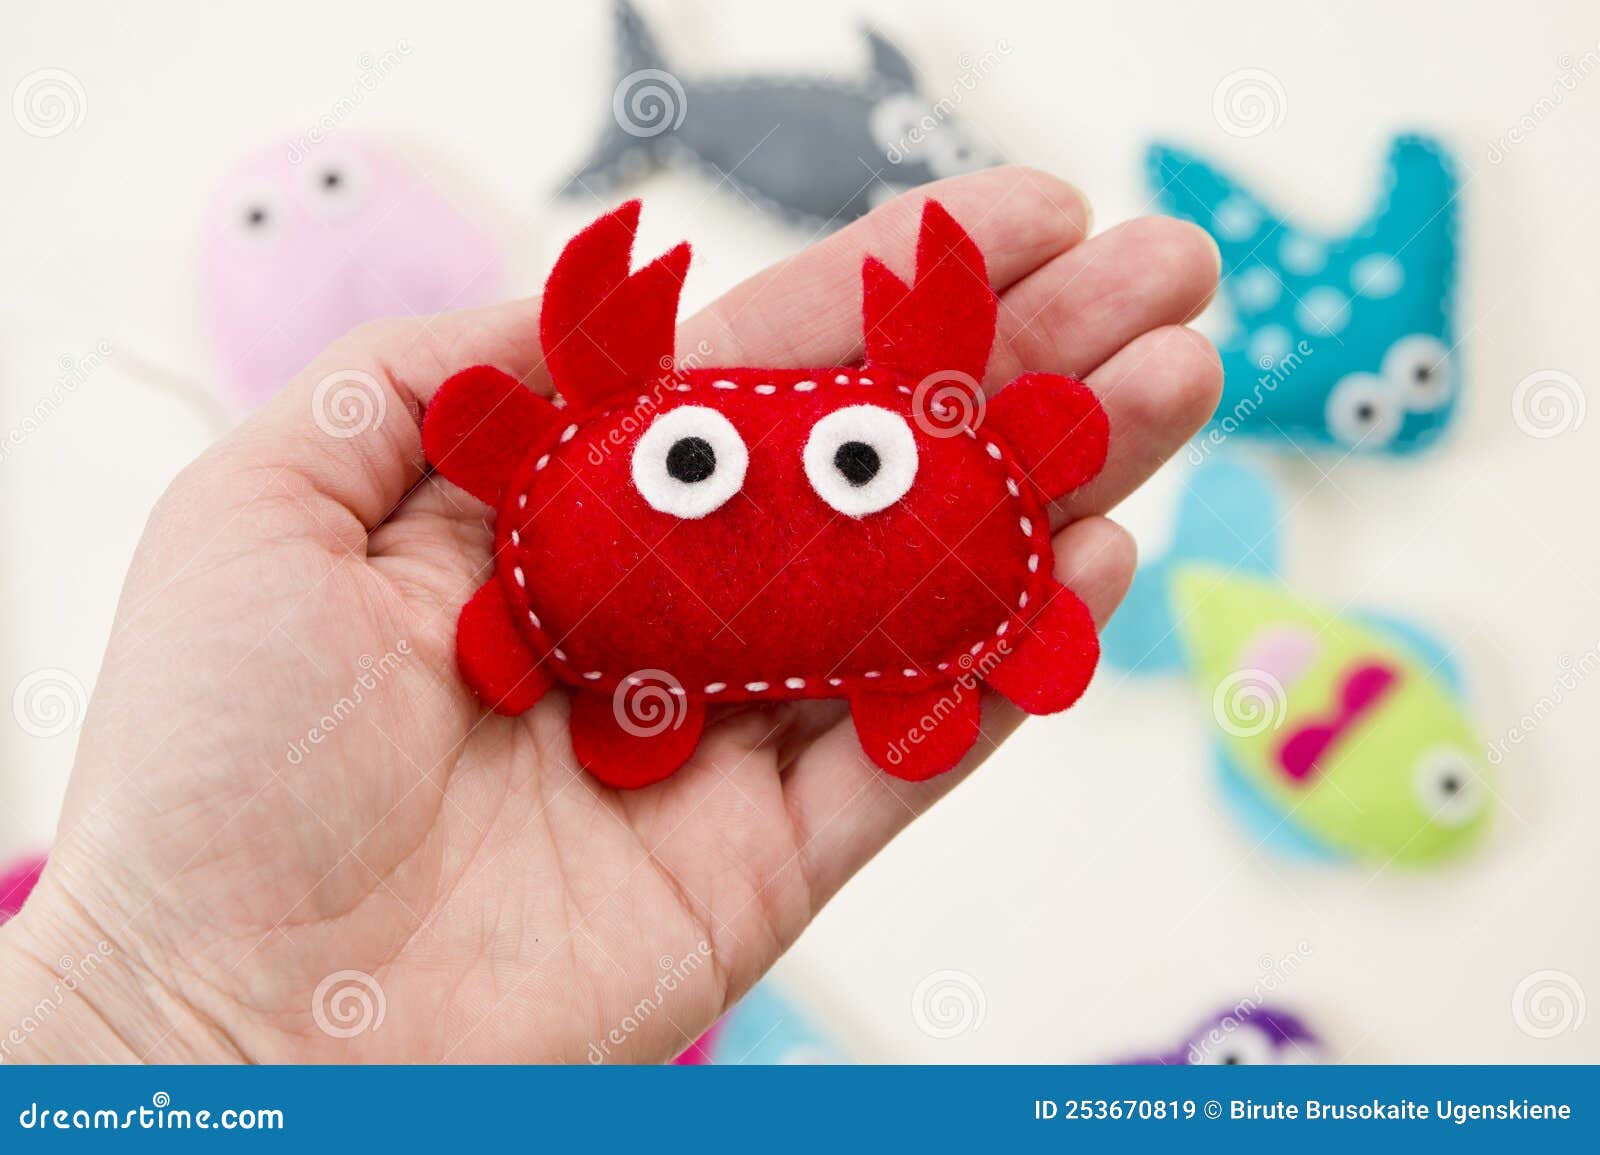 Hand Made Stuffed Felt Toy. Stock Image - Image of development,  preschooler: 253670819